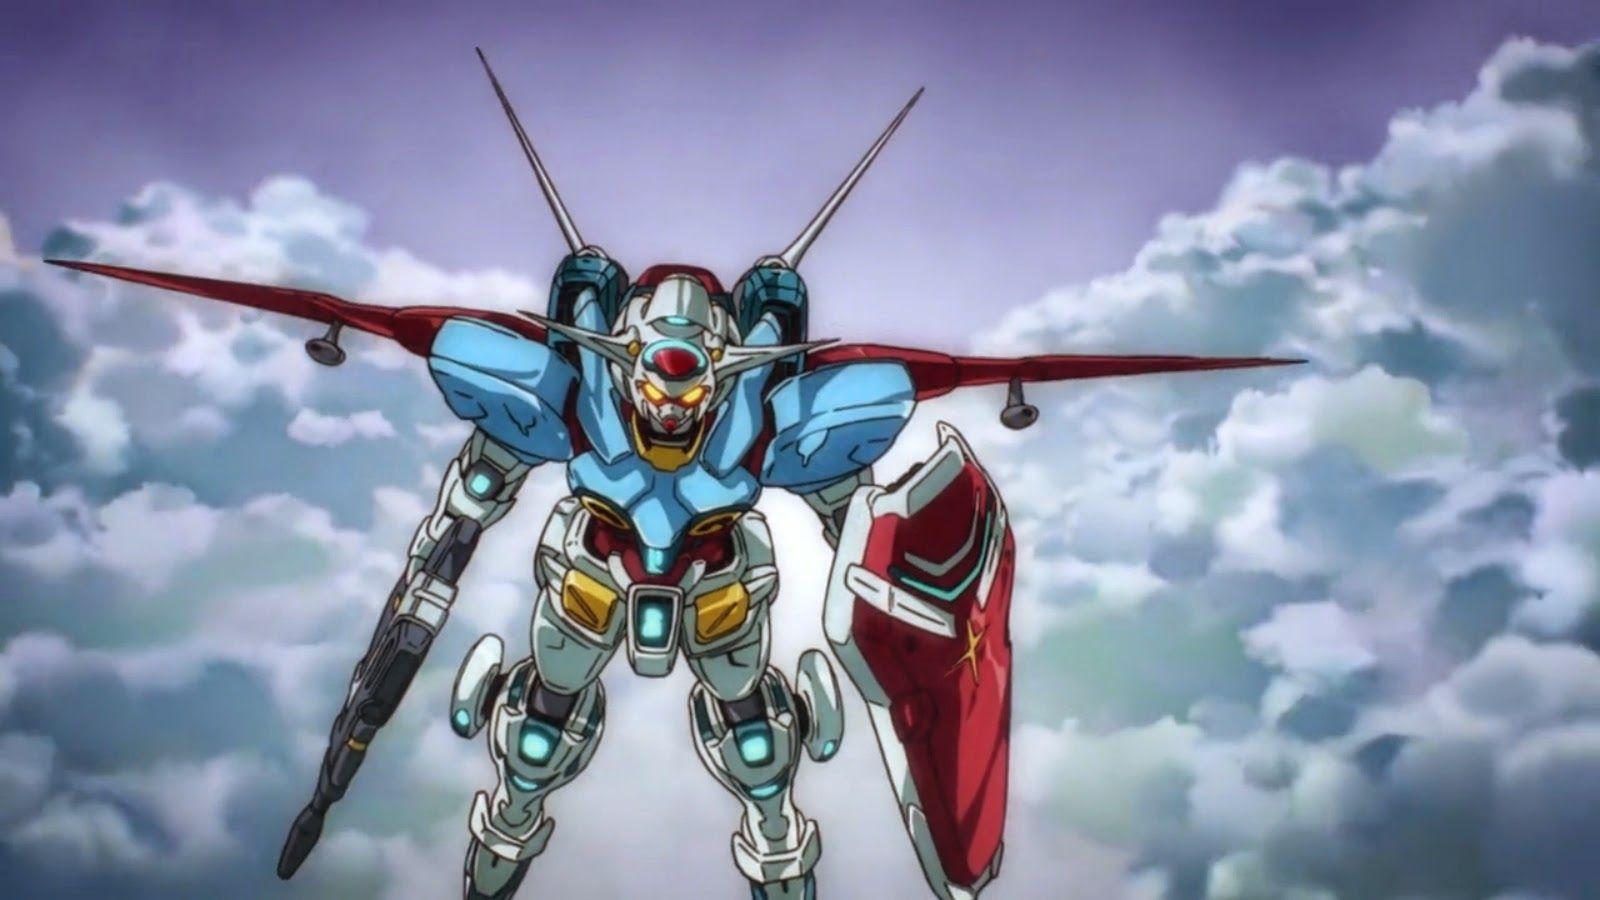 Gundam: G no Reconguista Episode 1 (English Sub) "The Mysterious